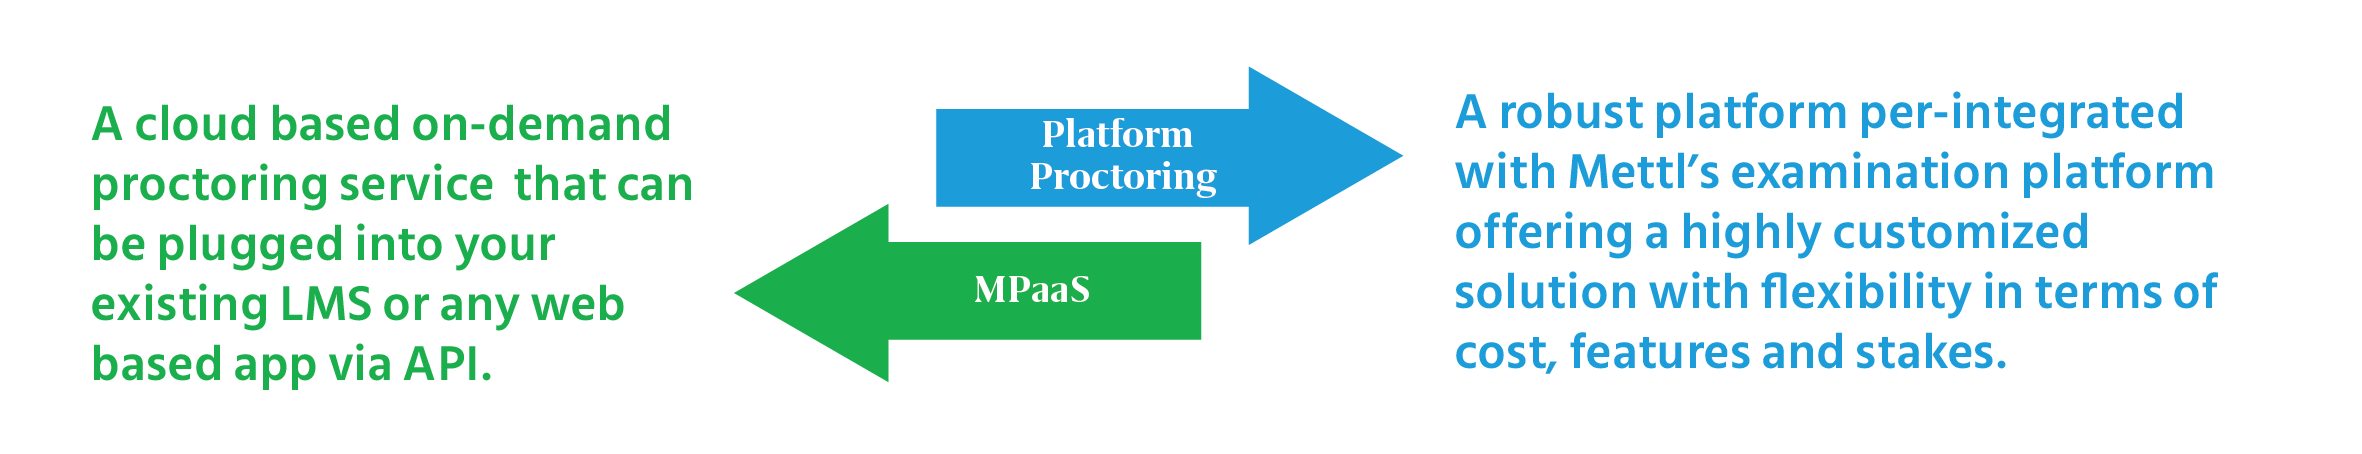 Platform_Proctoring_MPaaS_online_proctoring_services